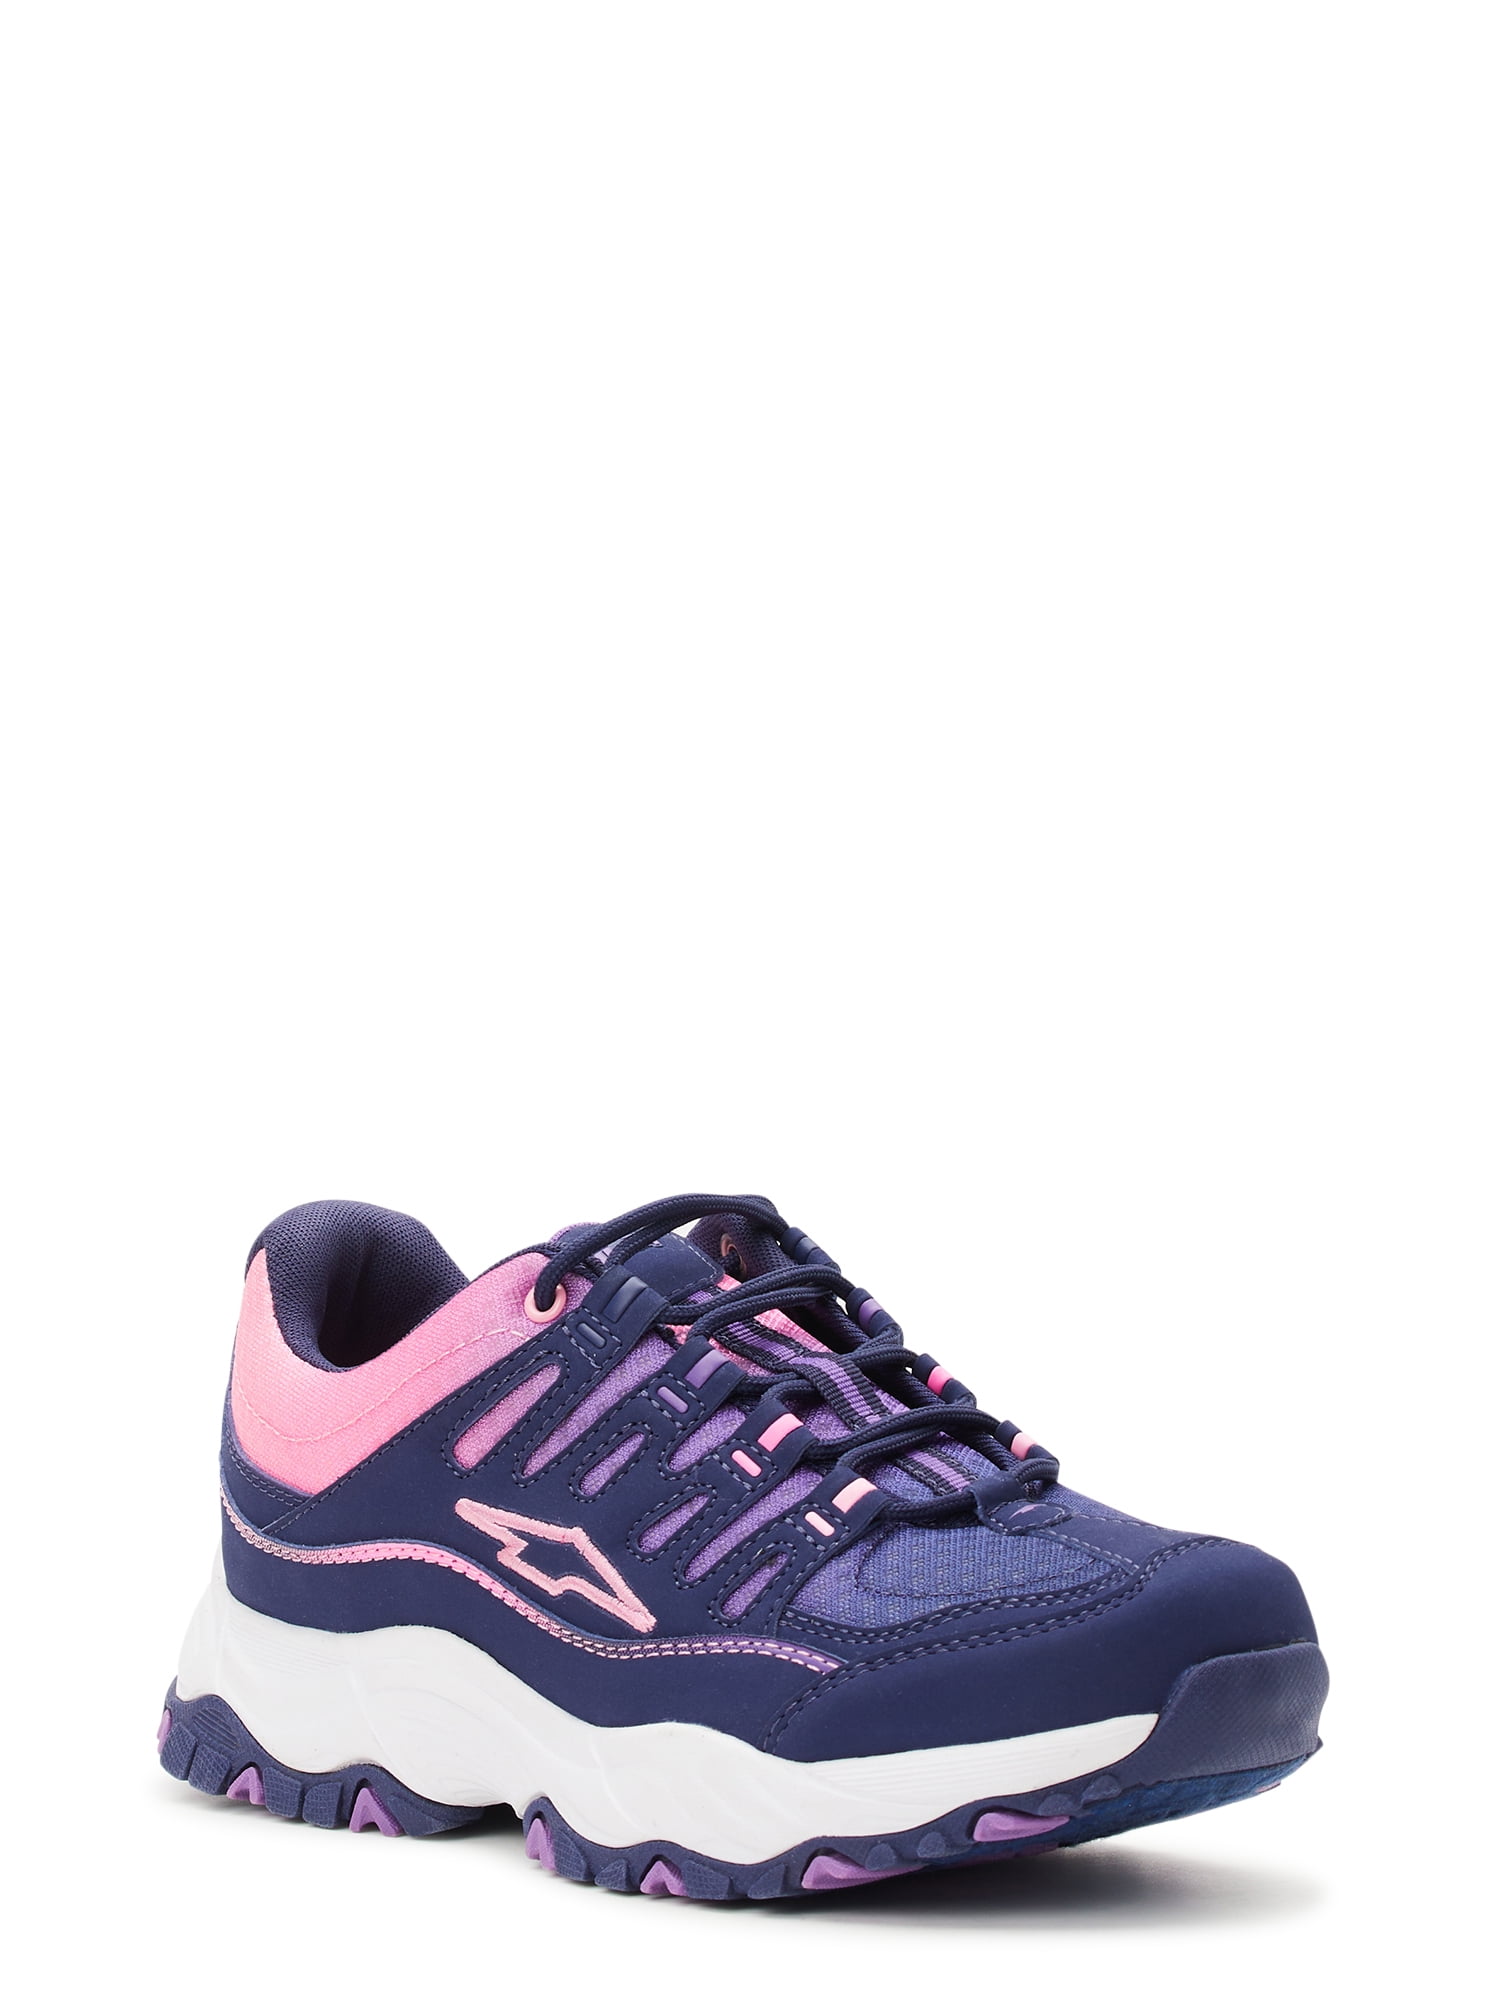 Avia gray and pink sneakers  Pink sneakers, Sneakers, Avia